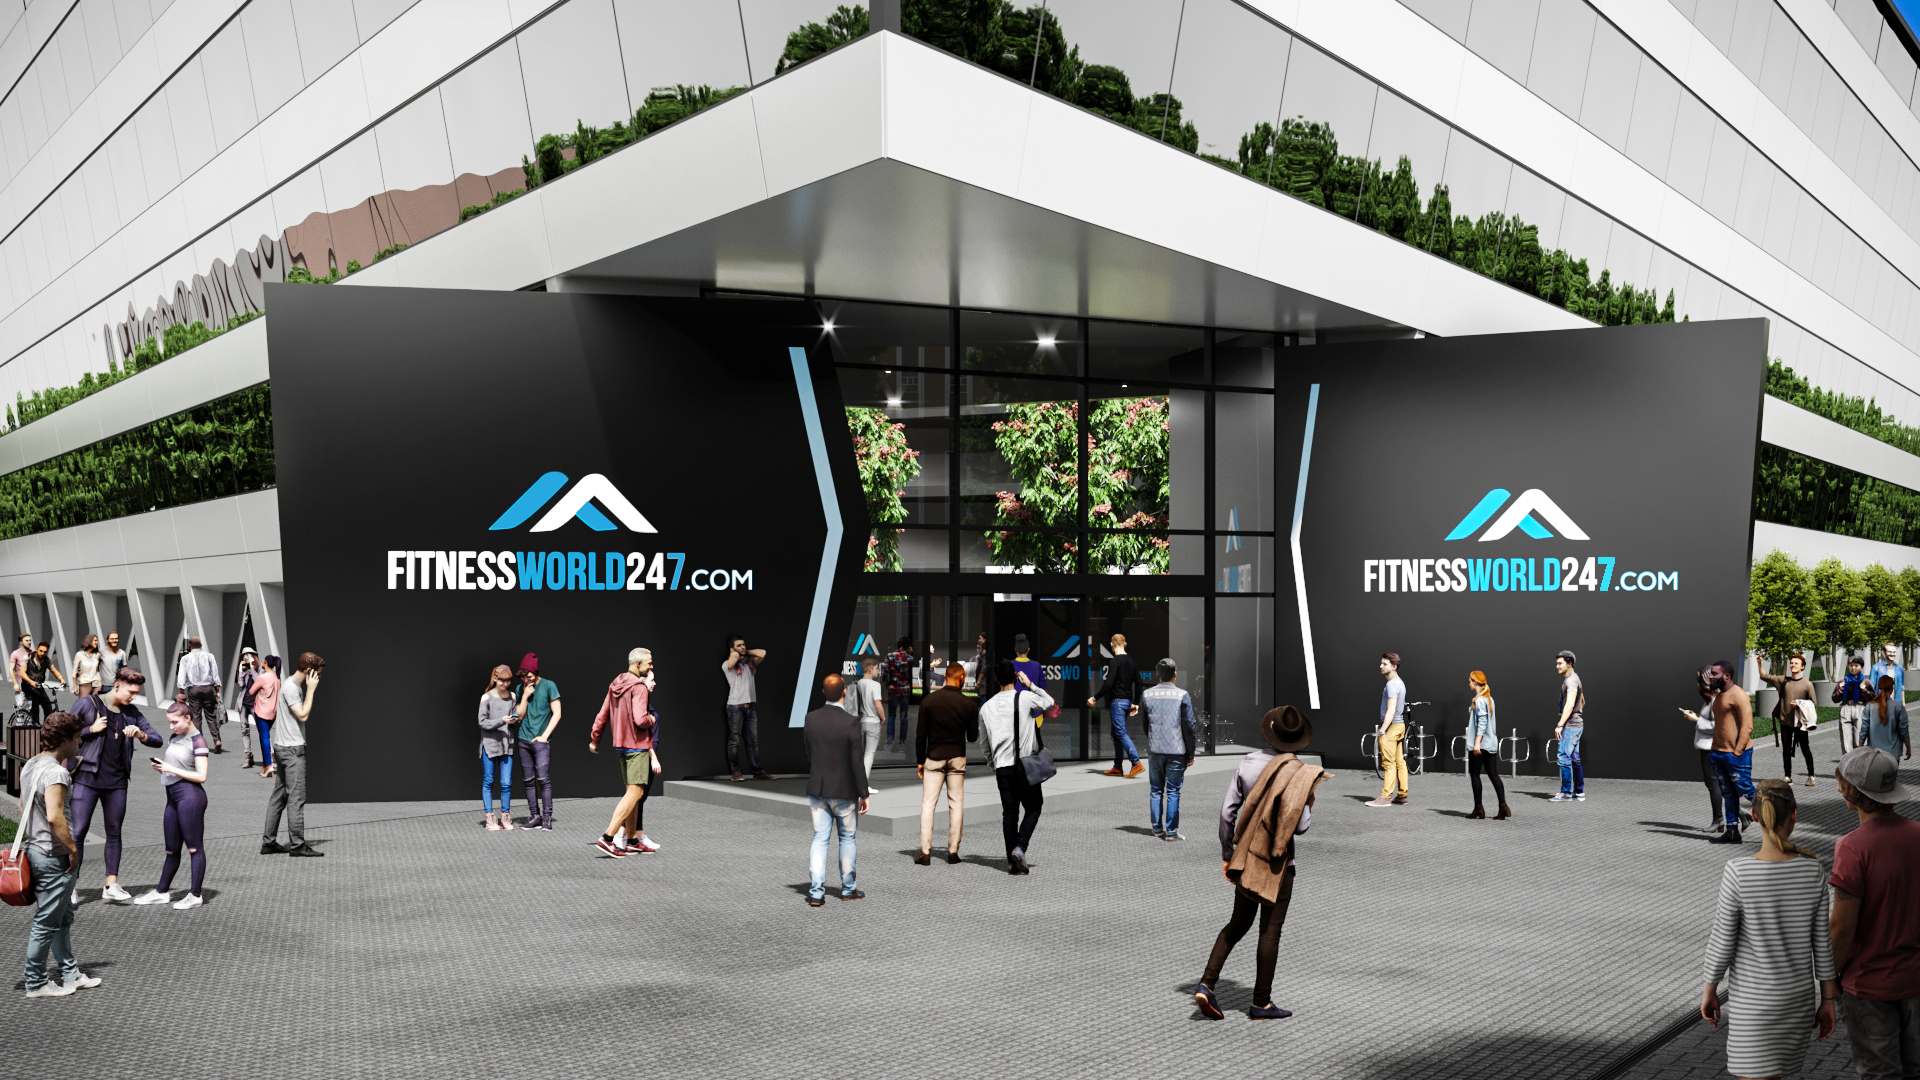 FitnessWorld247 Exhibition hall CGI virtual expo